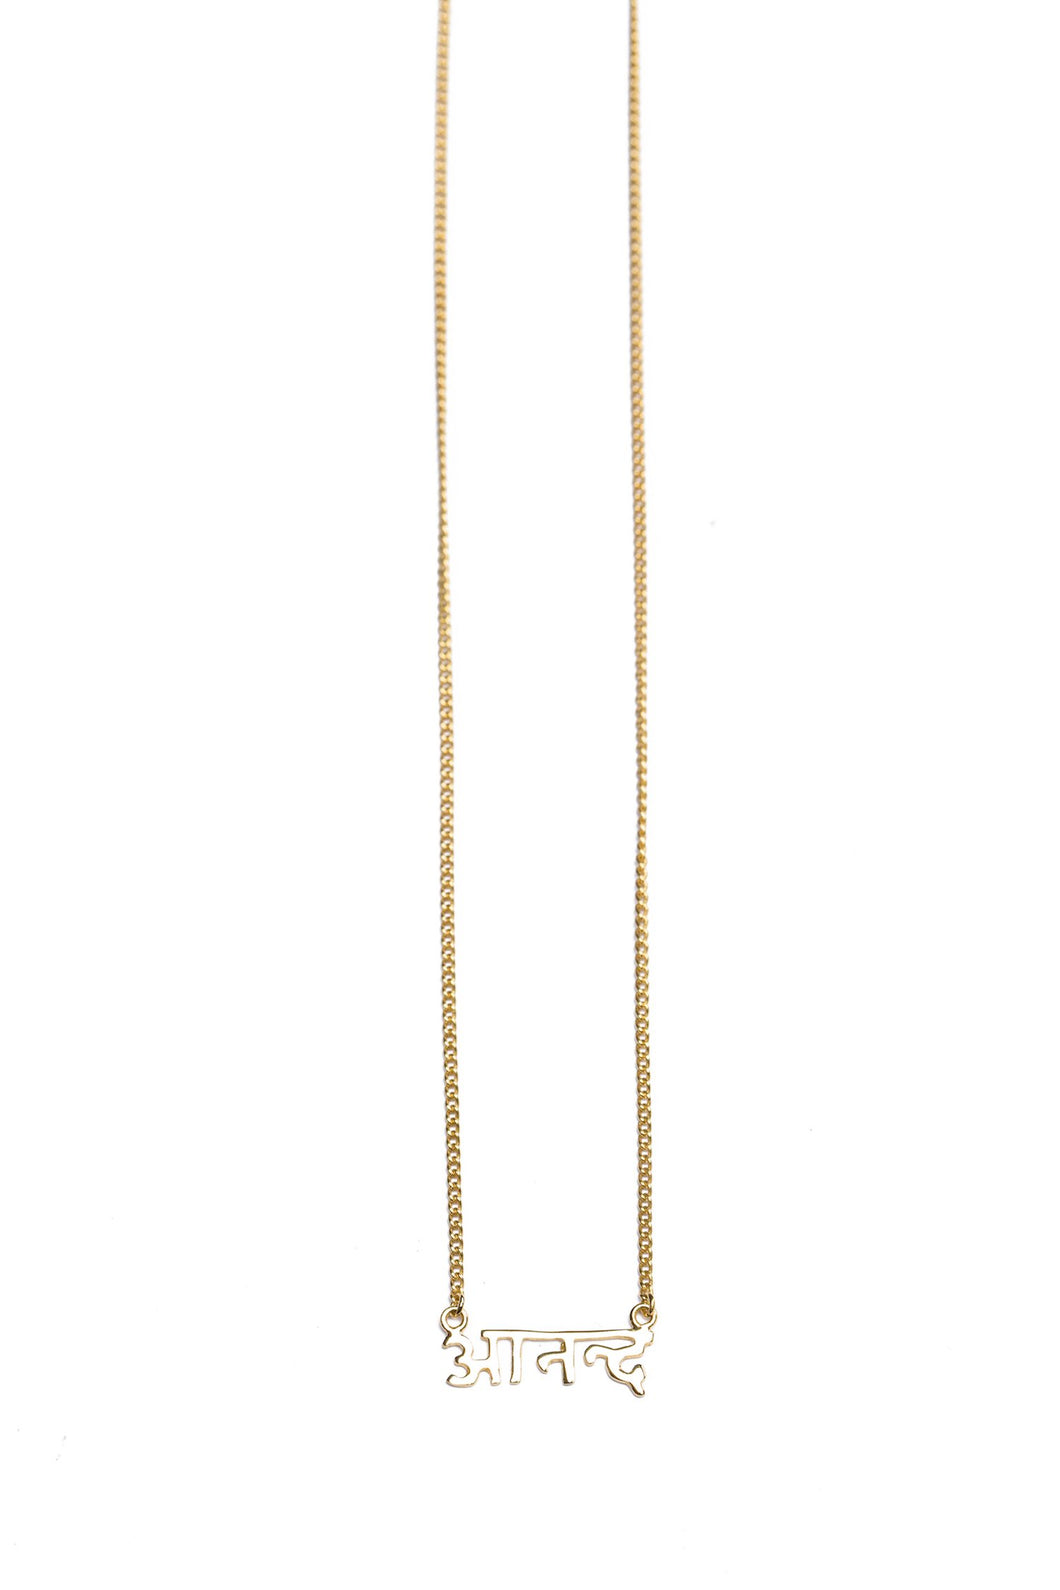 Happiness – Sanskrit Necklace (Gold)